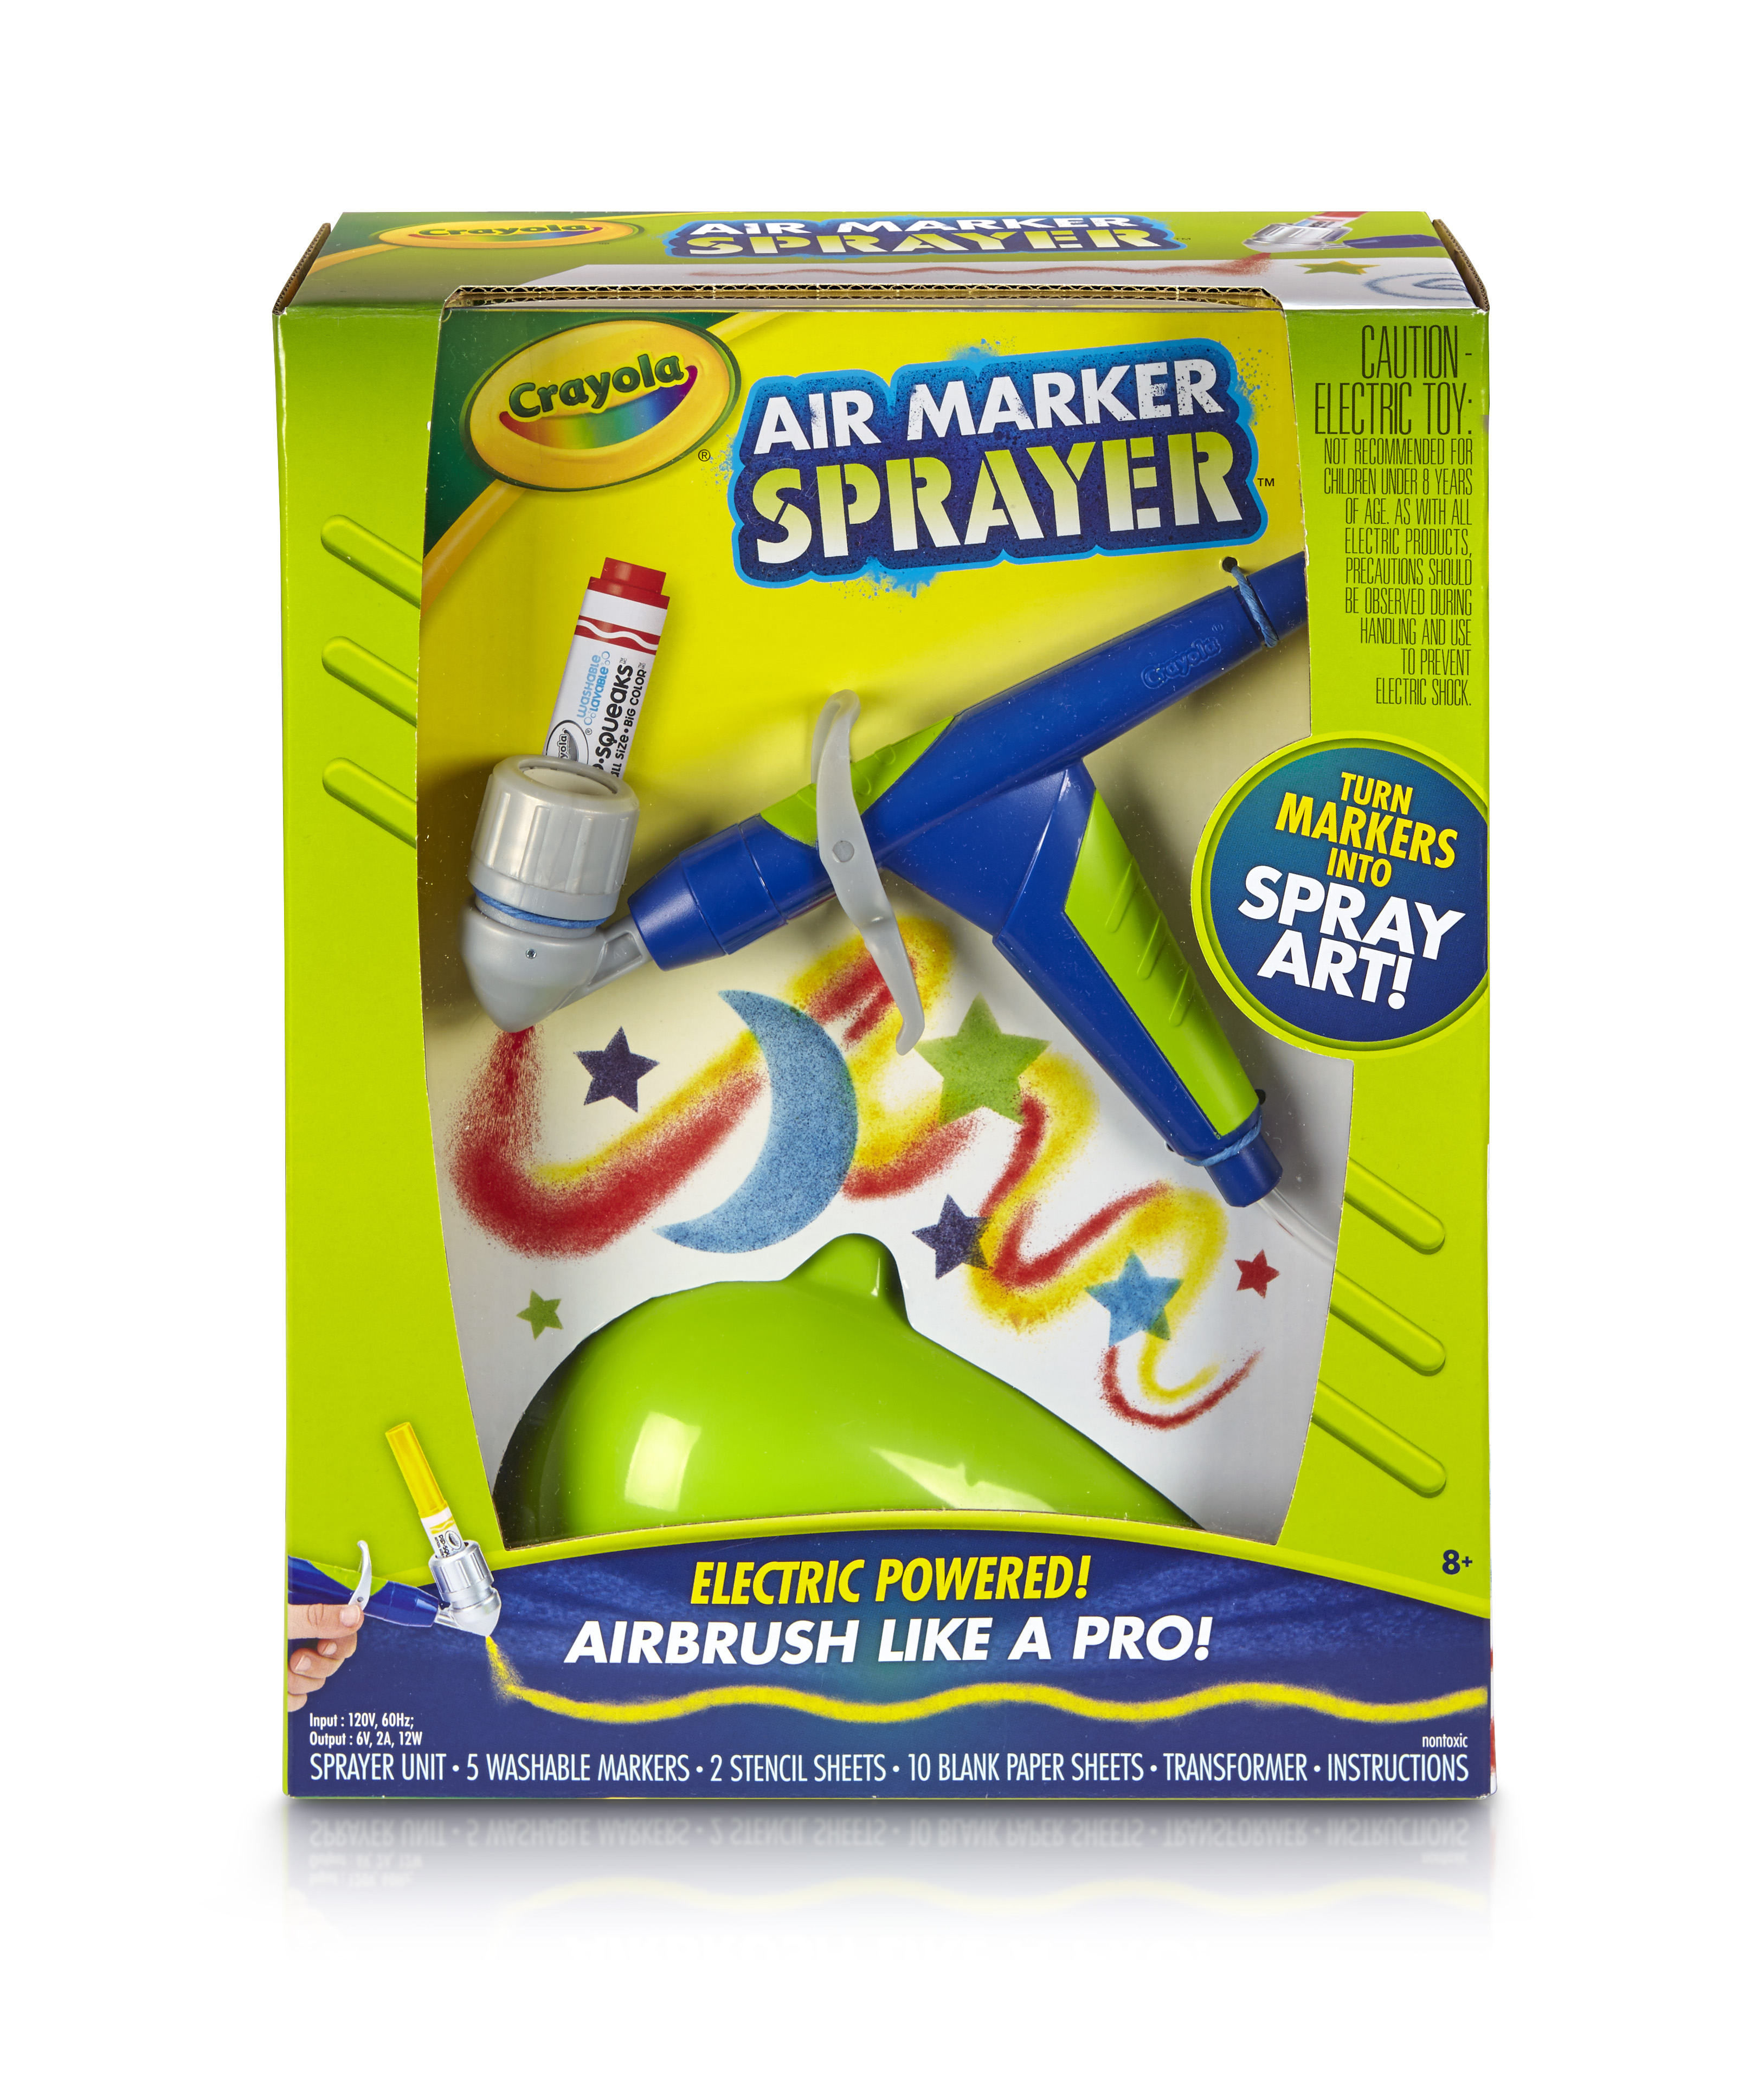 Crayola Air Marker Sprayer, School Supplies, Toys, Washable Markers, Beginner Child - image 7 of 9